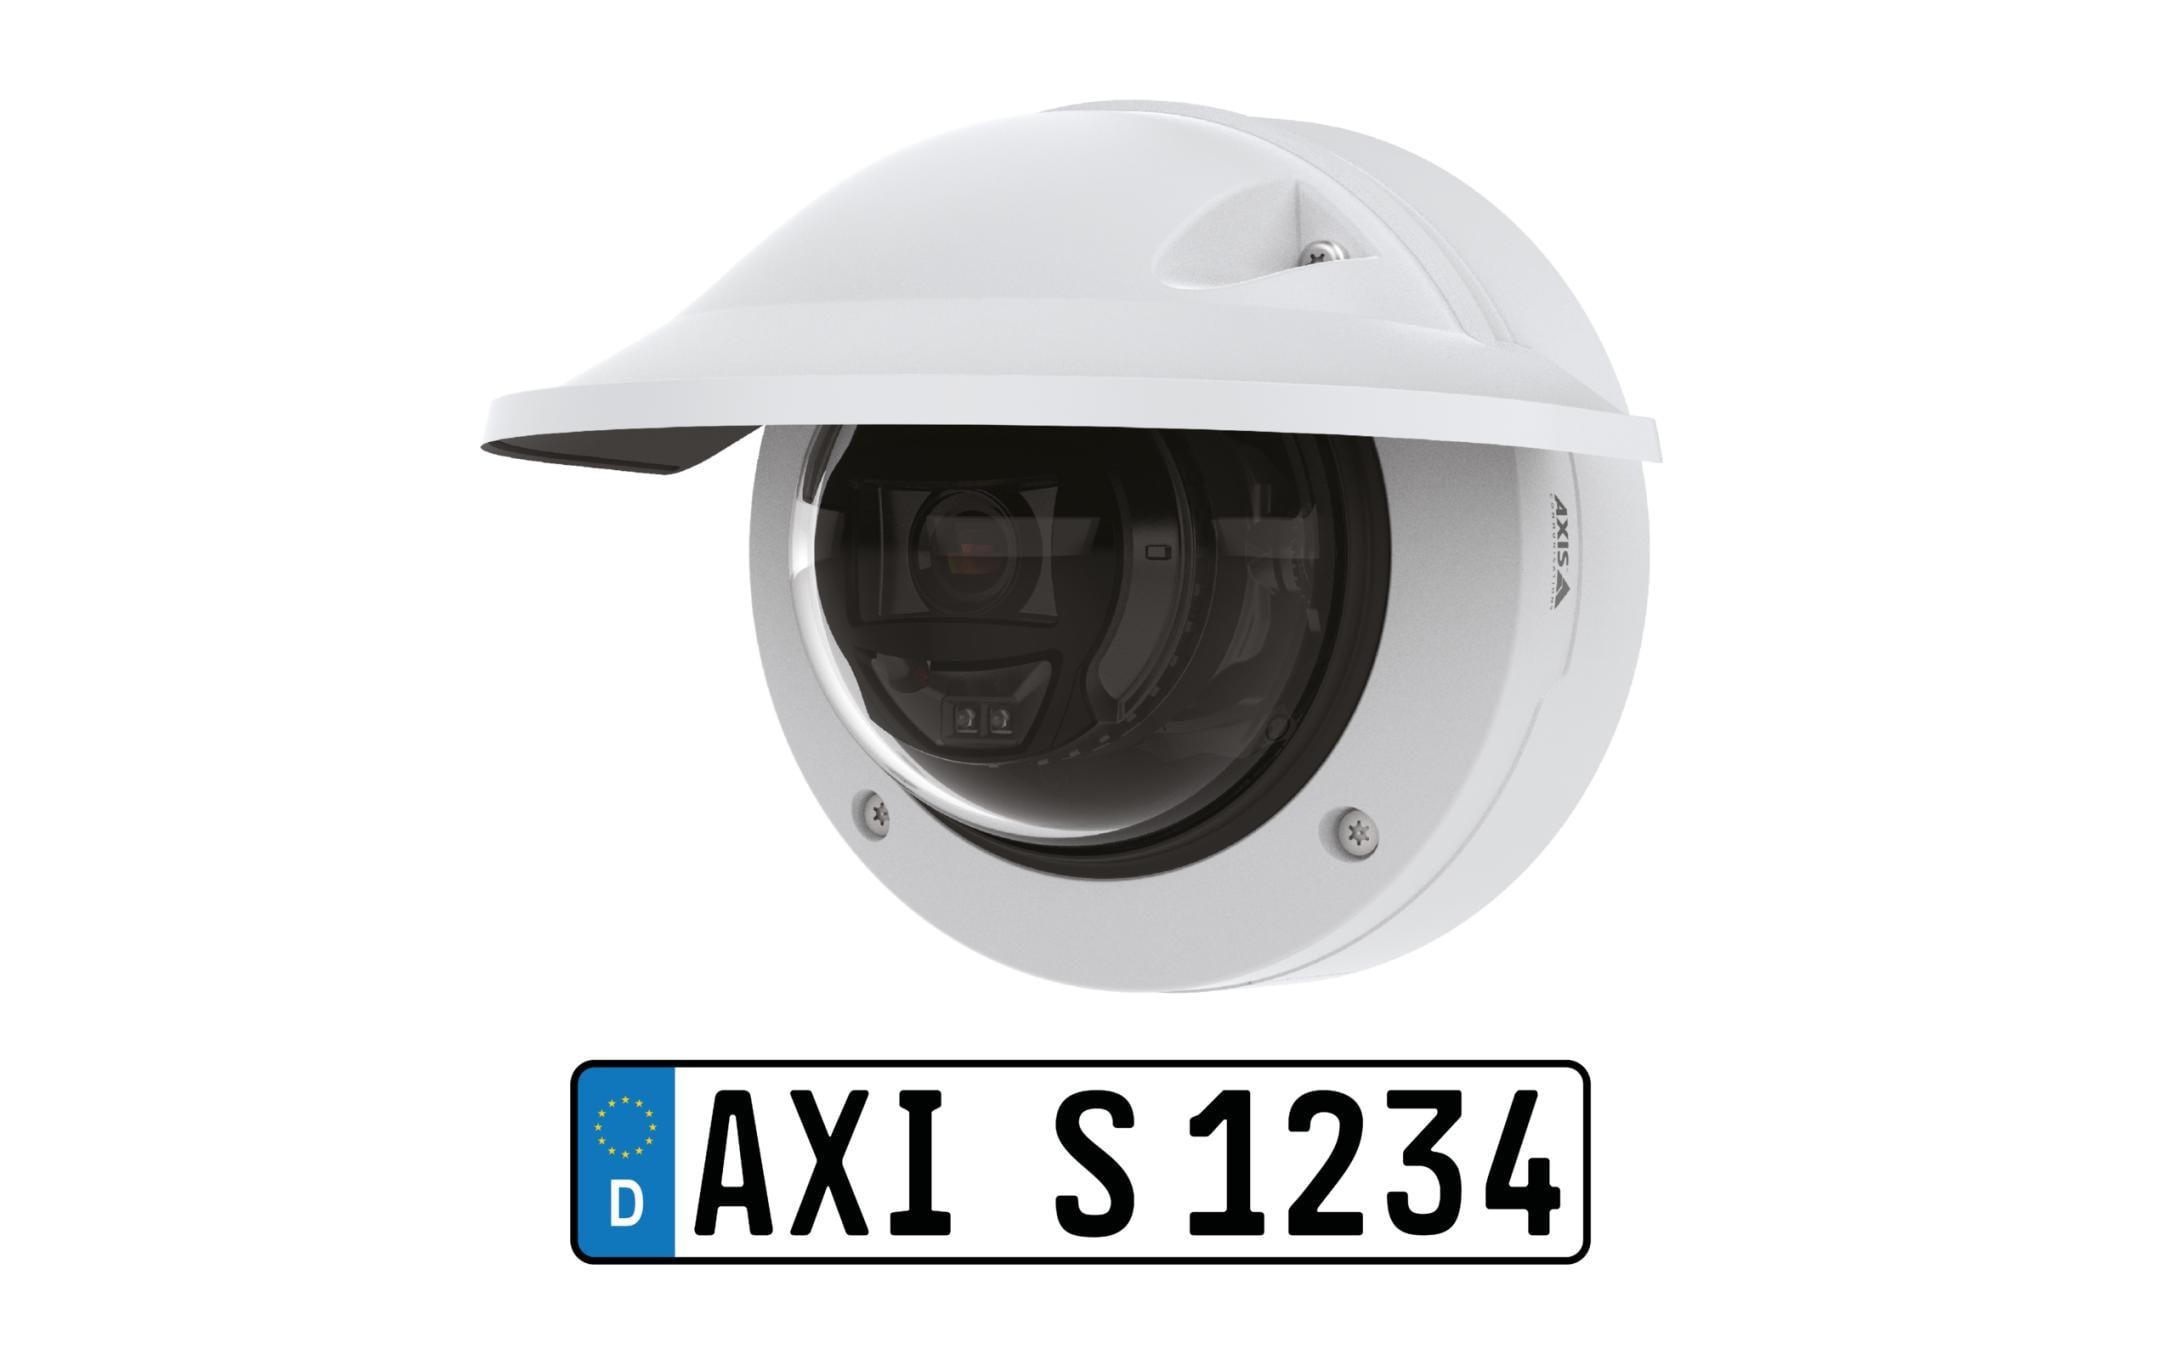 Axis Netzwerkkamera P3265-LVE-3 License Plate Verifier Kit